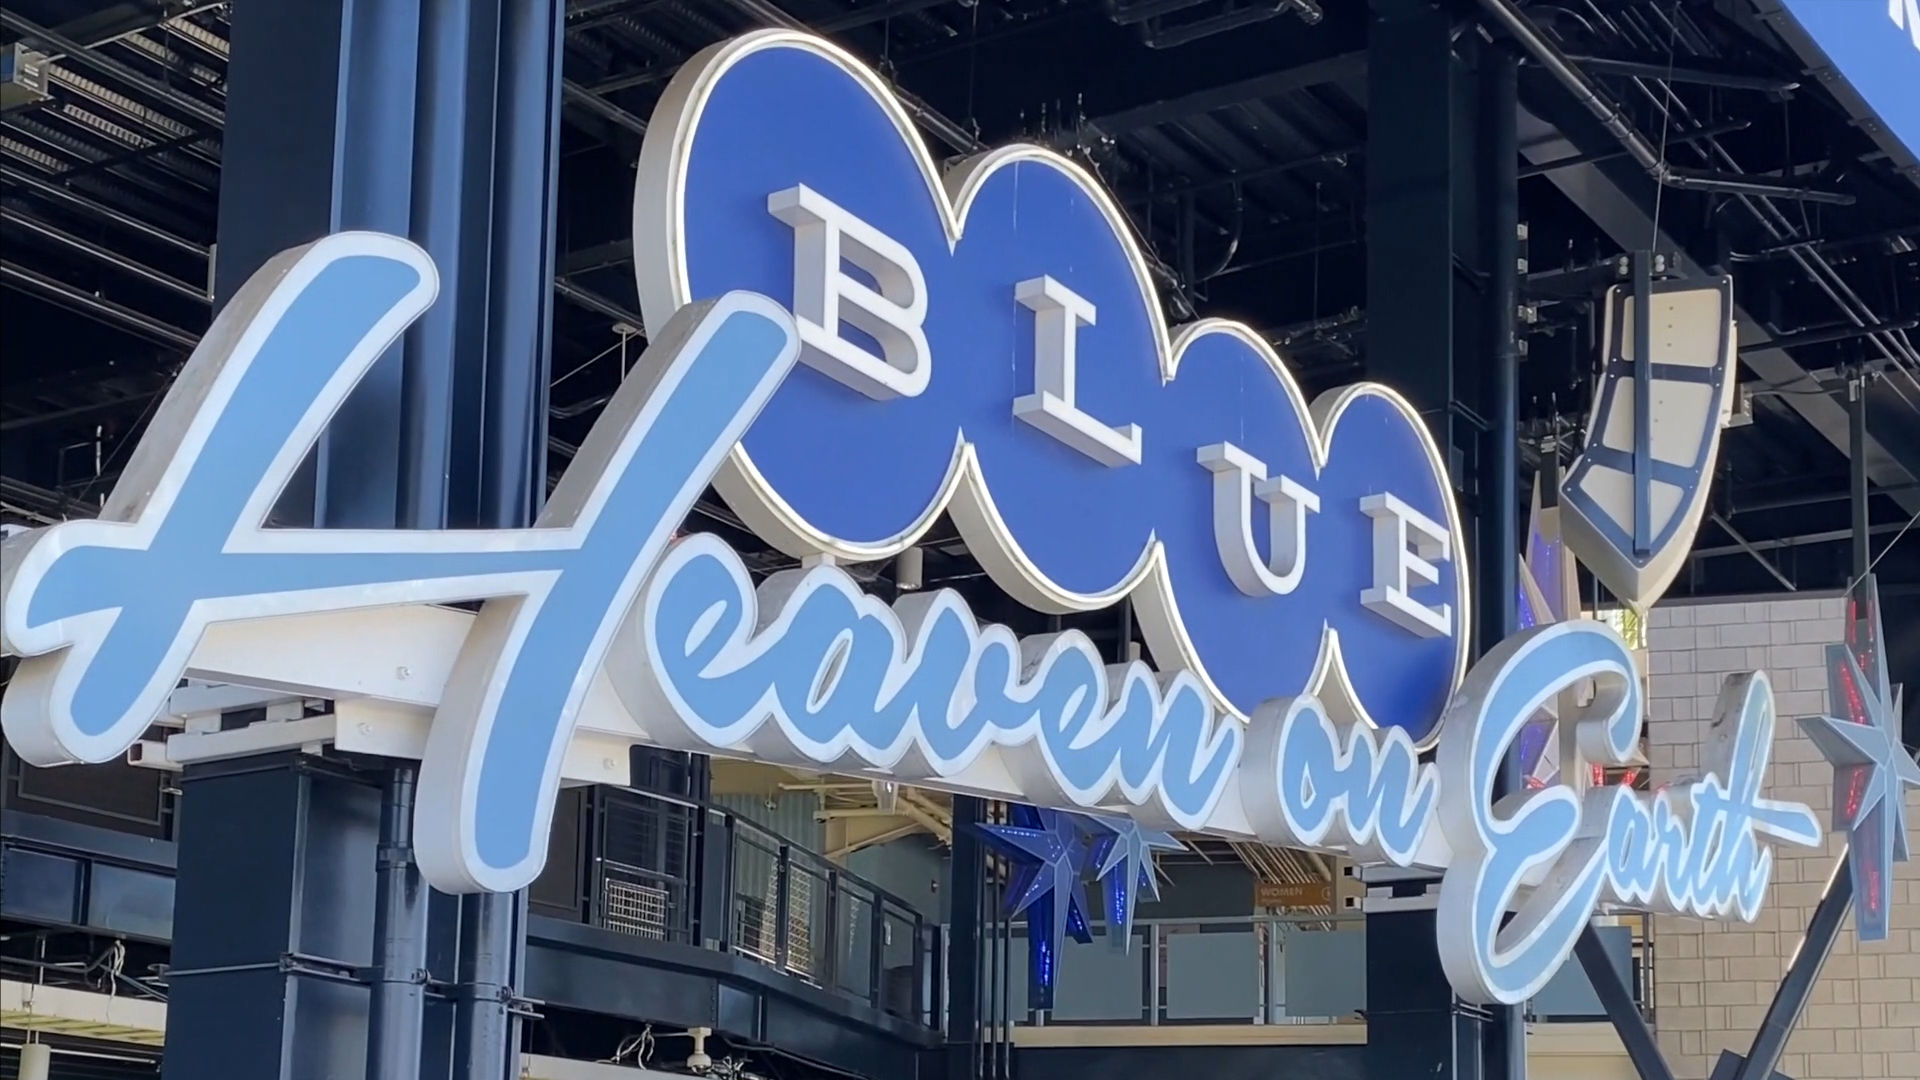 Blue Heaven on Earth Dodger Stadium